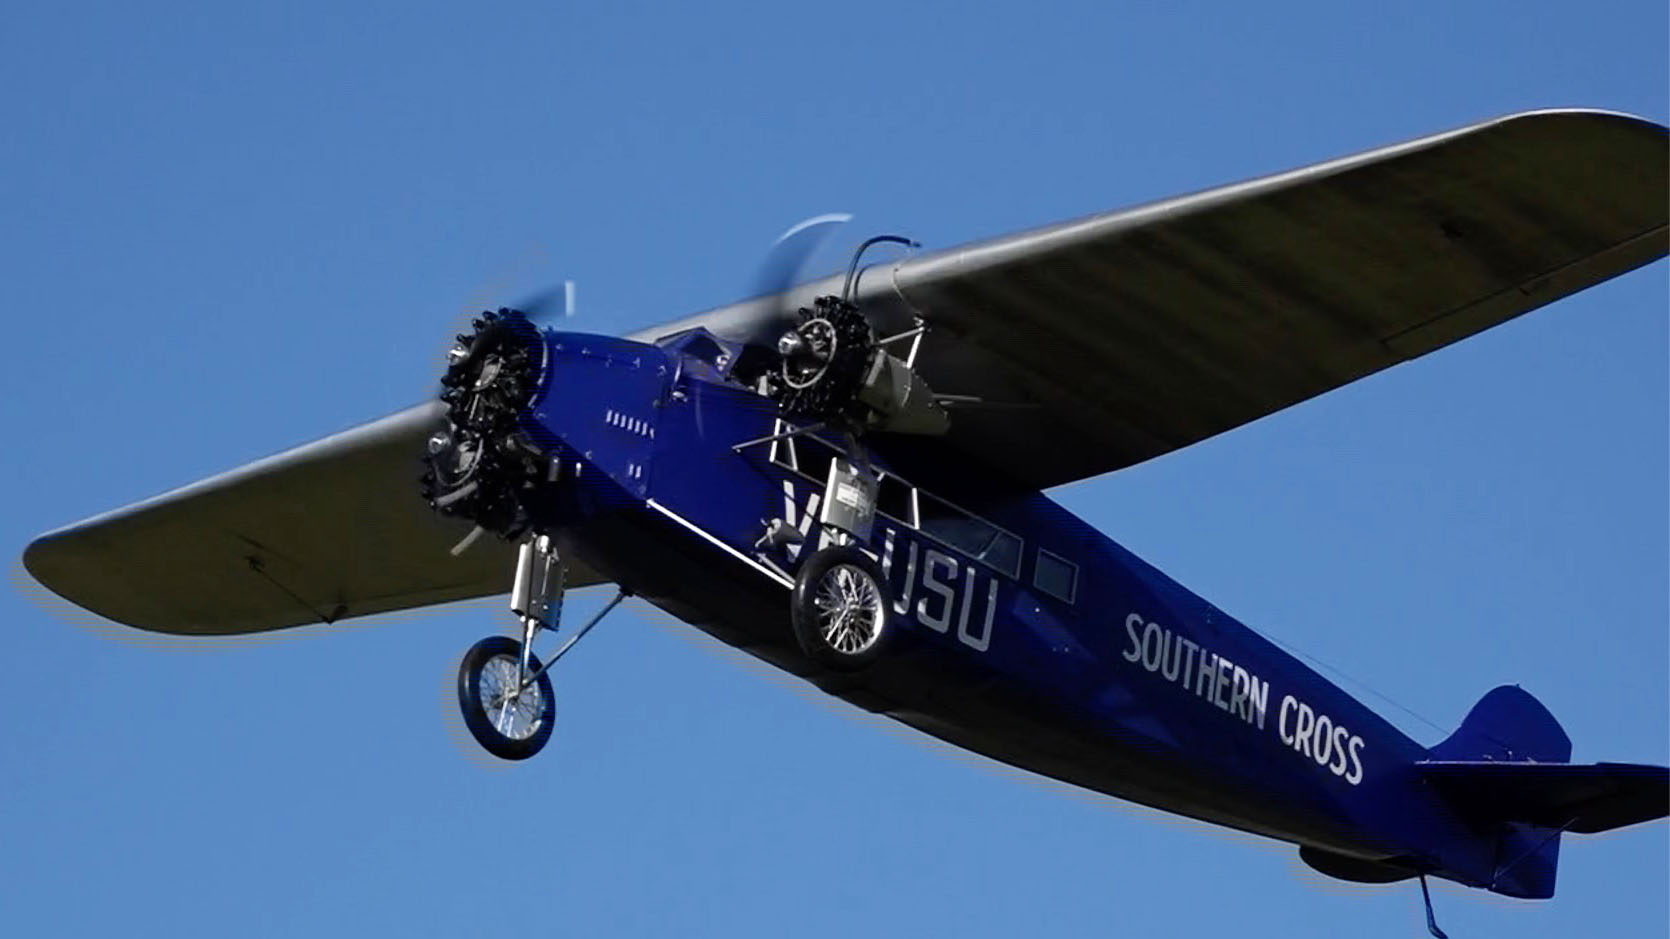 Peter Hewson Model Plane 2